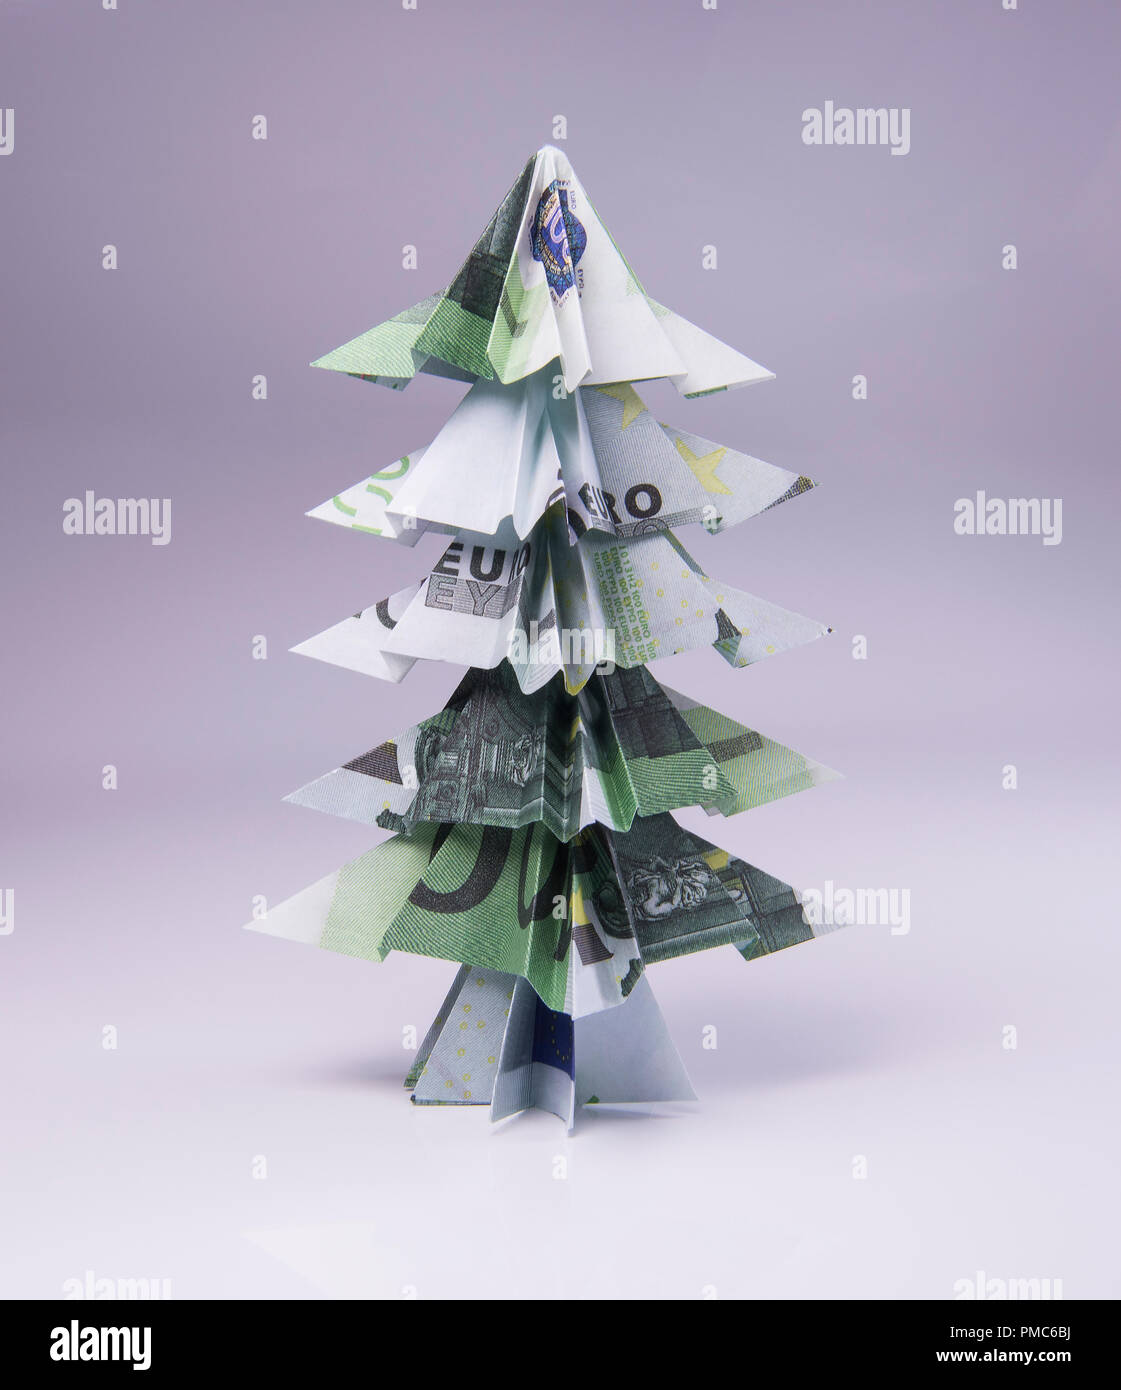 Money Origami Christmas Tree Stock Photo 219085990 Alamy